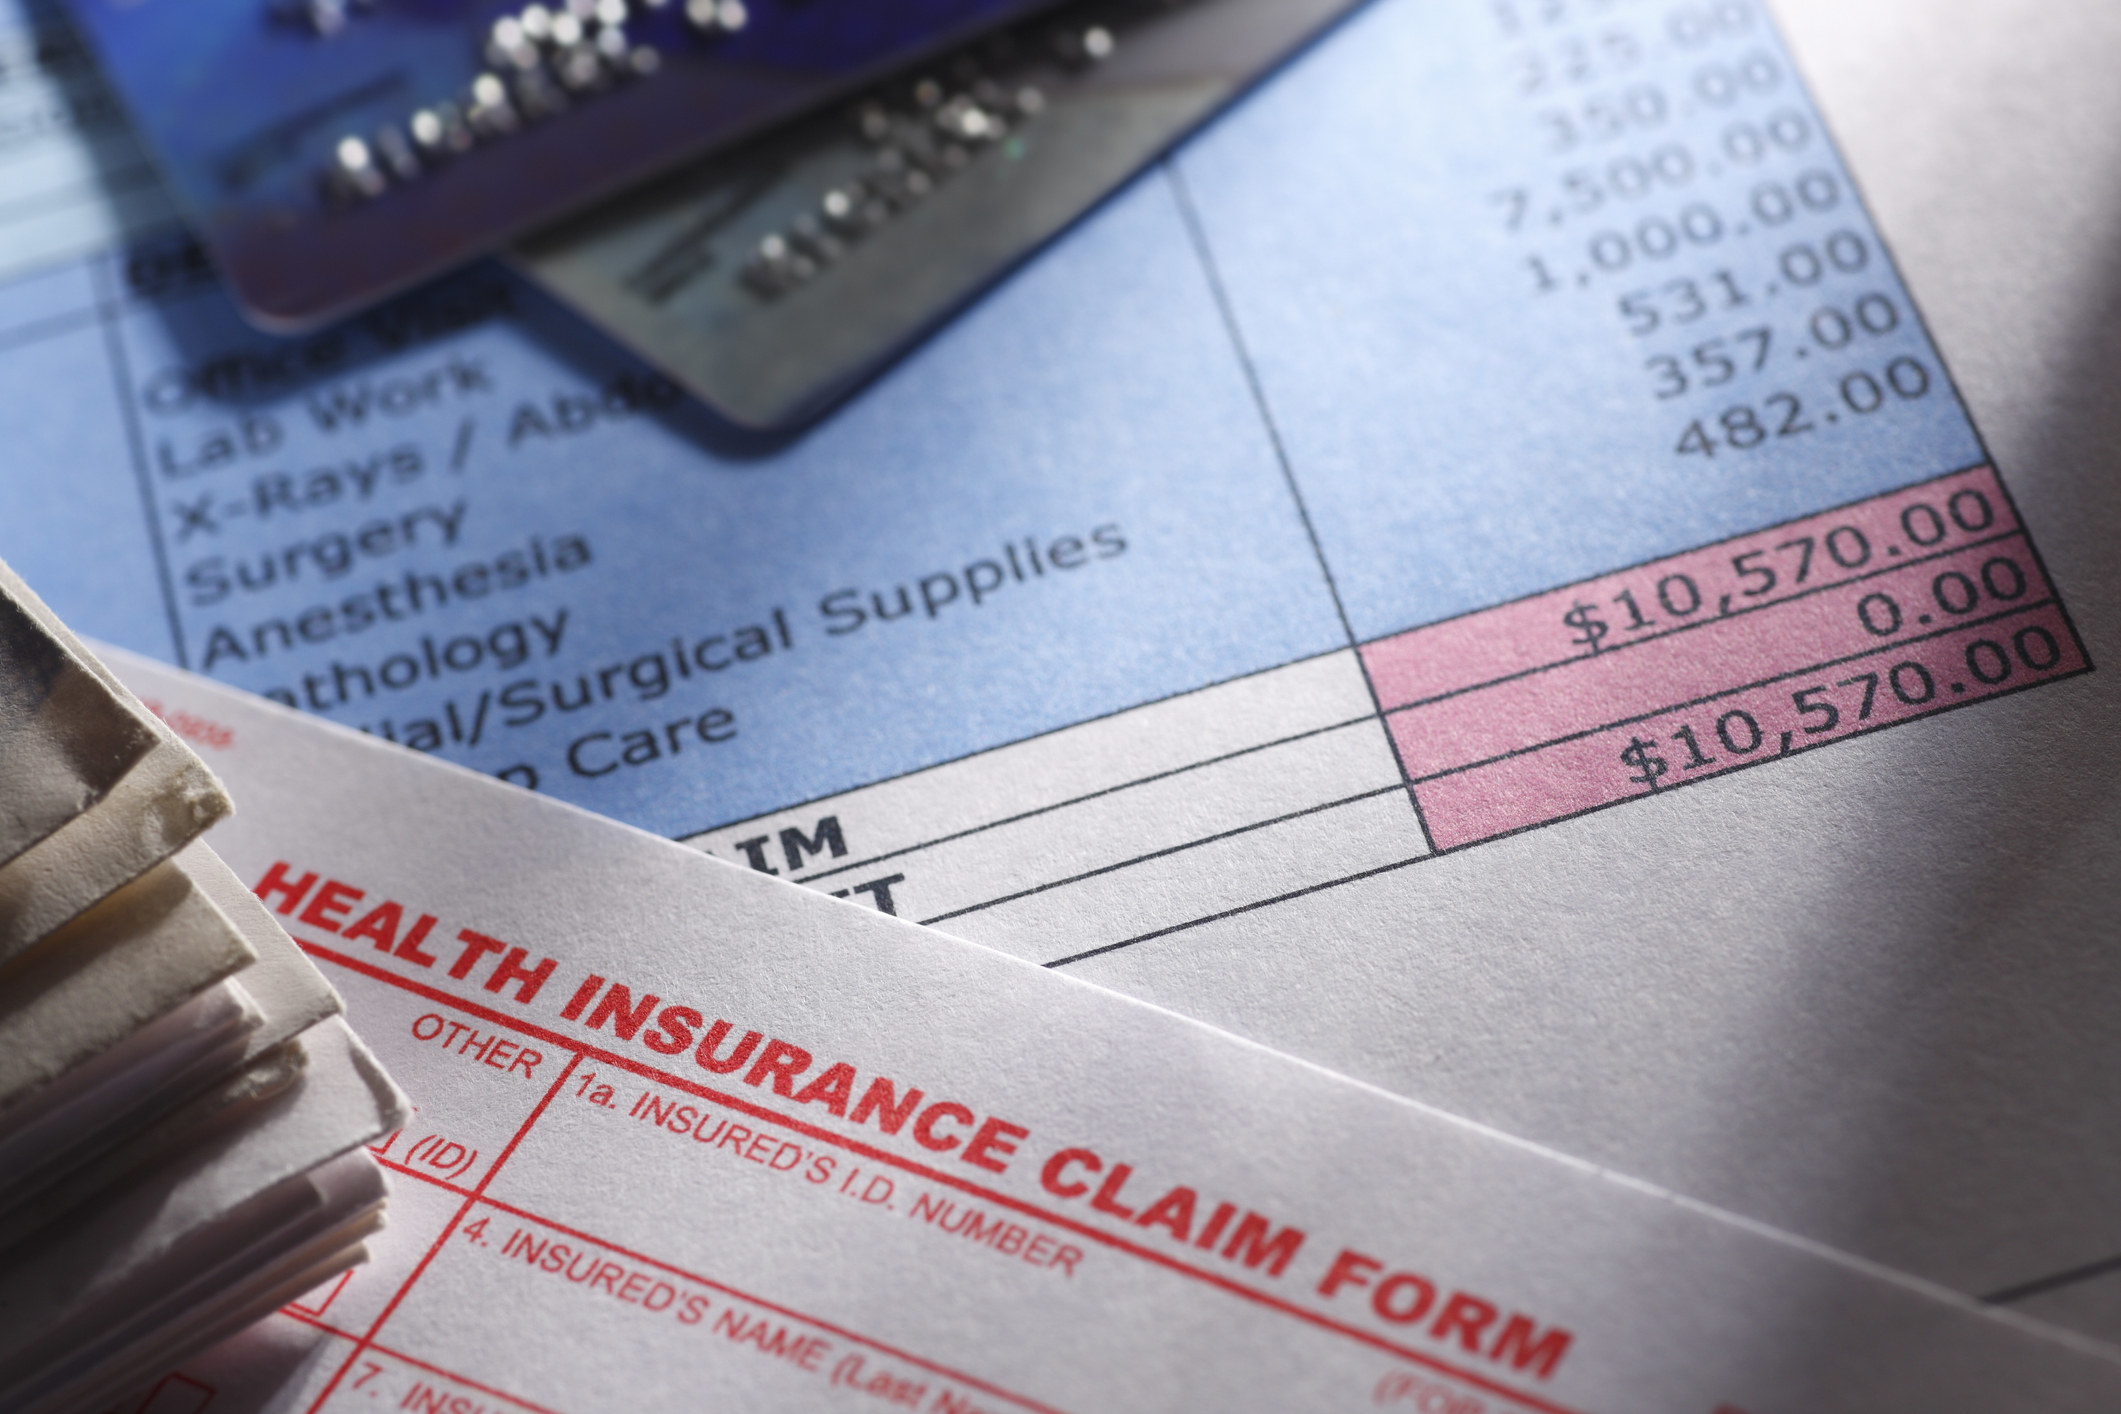 A hospital bill and insurance claim form